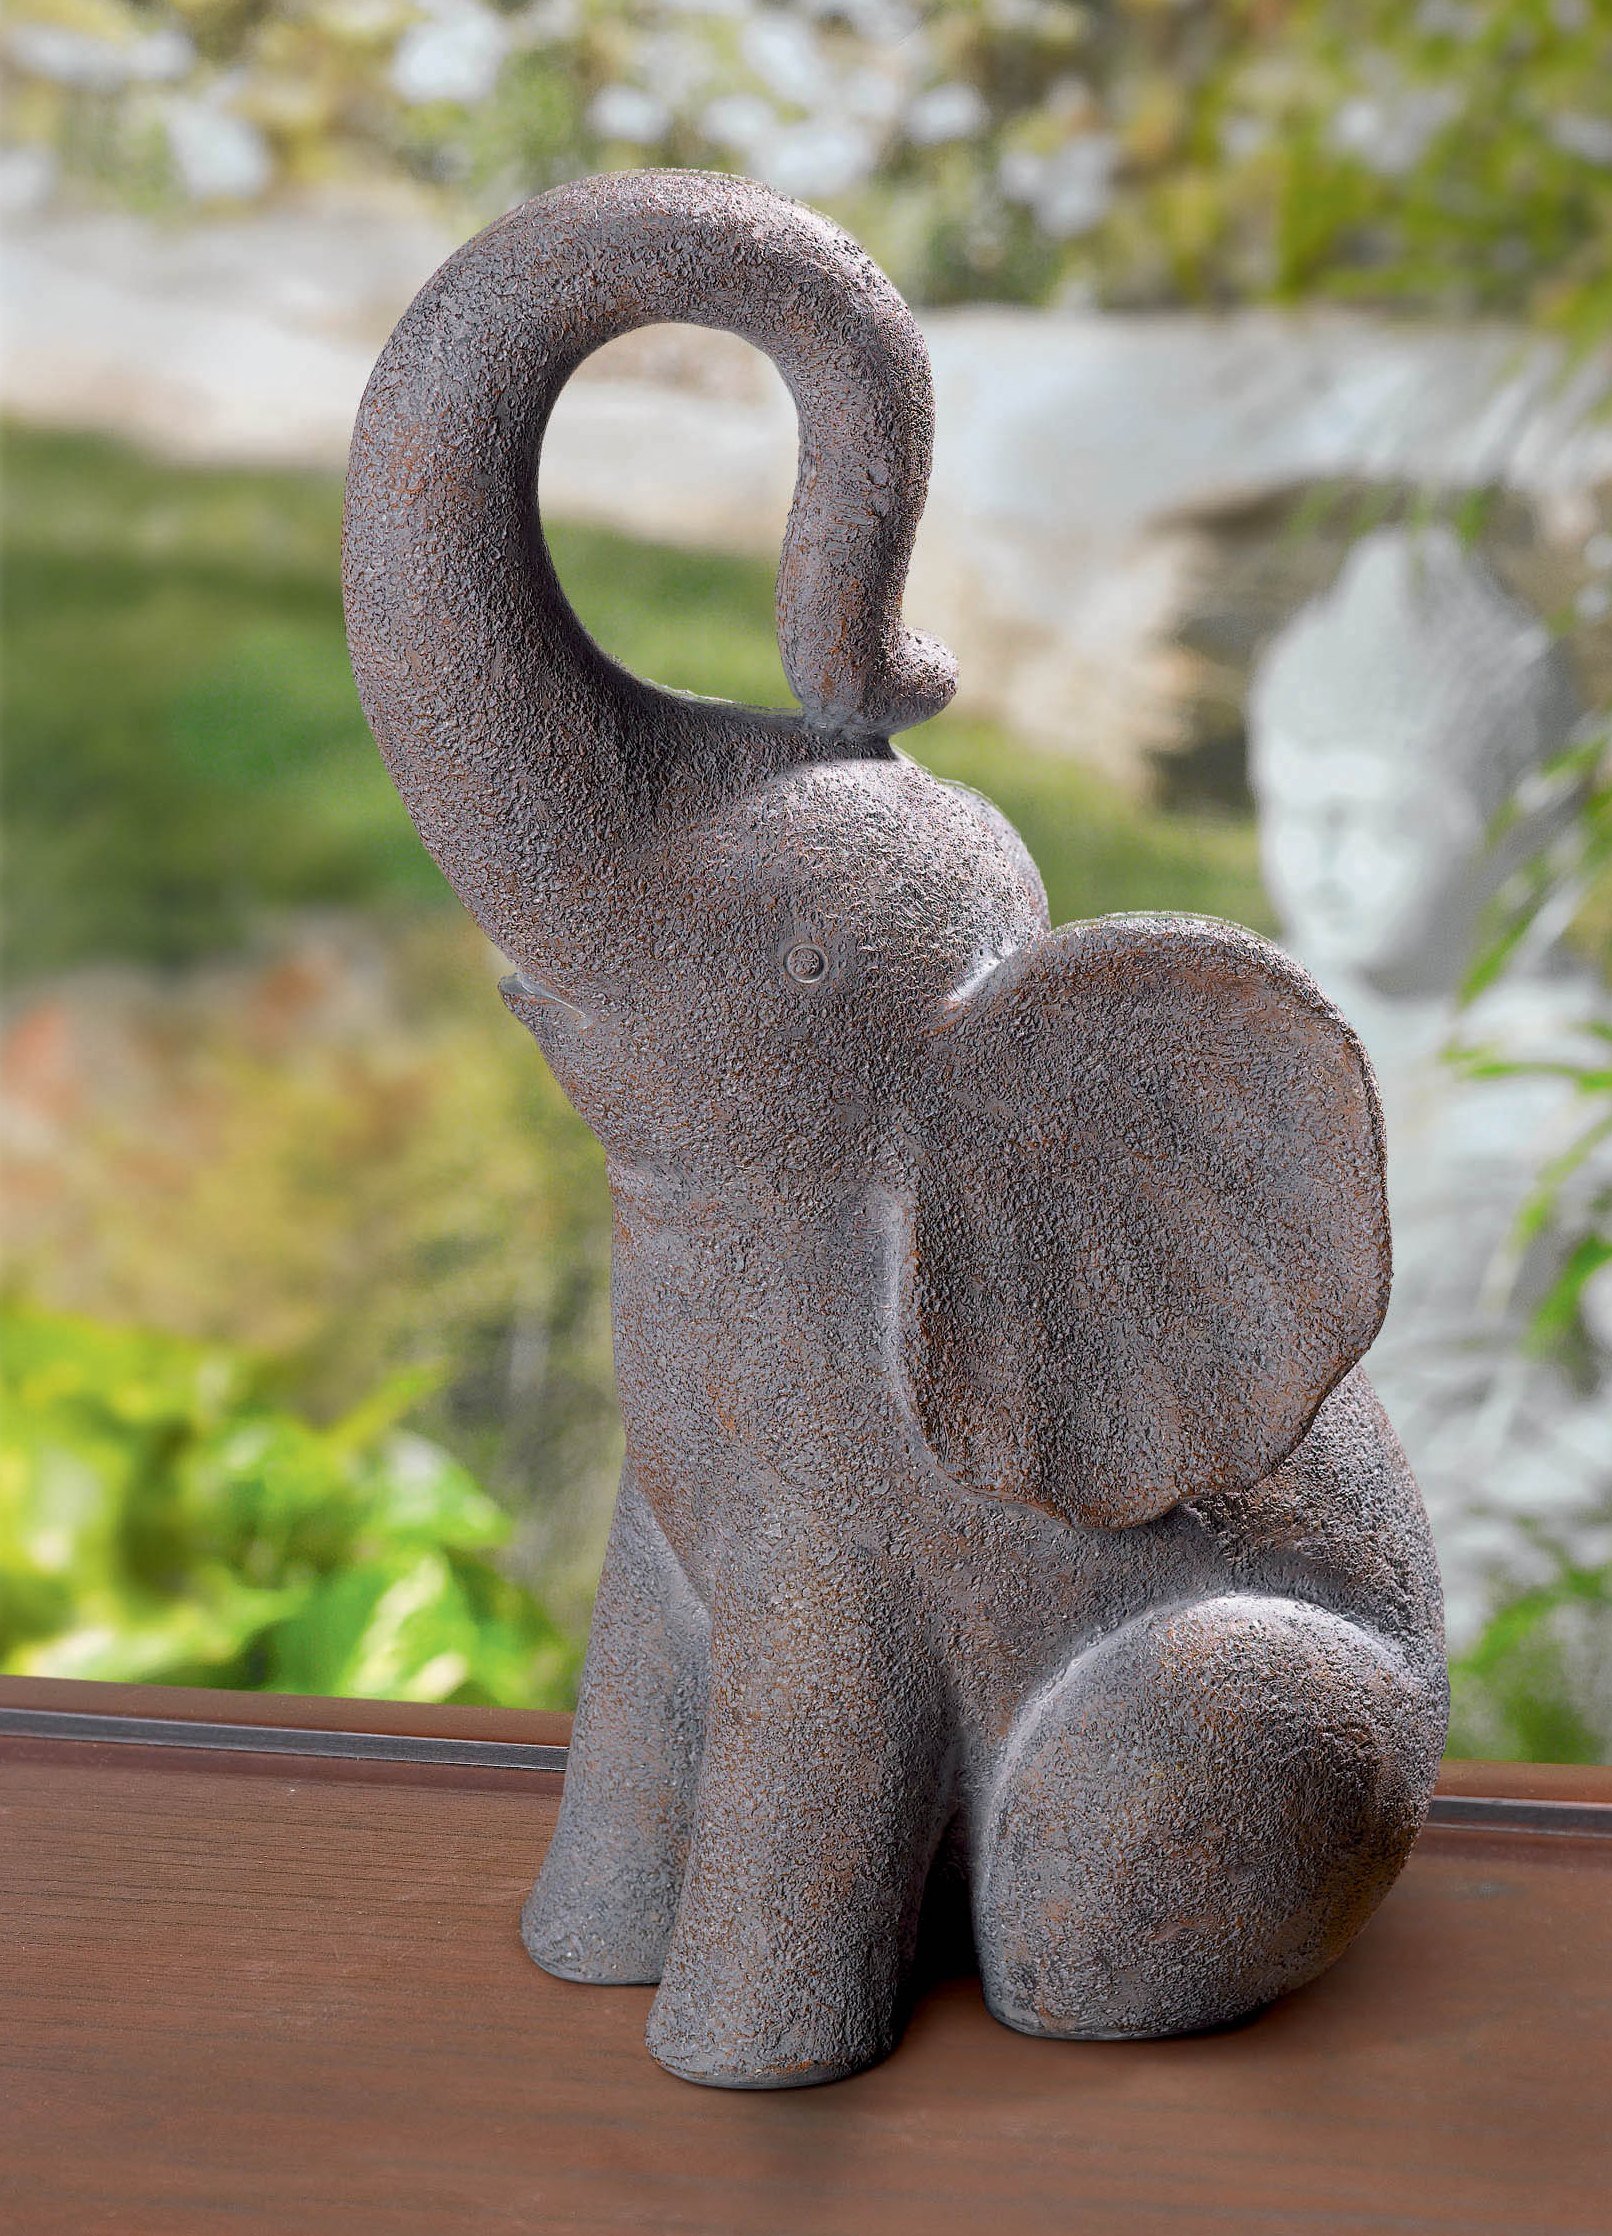 Grasslands Road World Garden Good Luck Elephant Statue - image 2 of 3